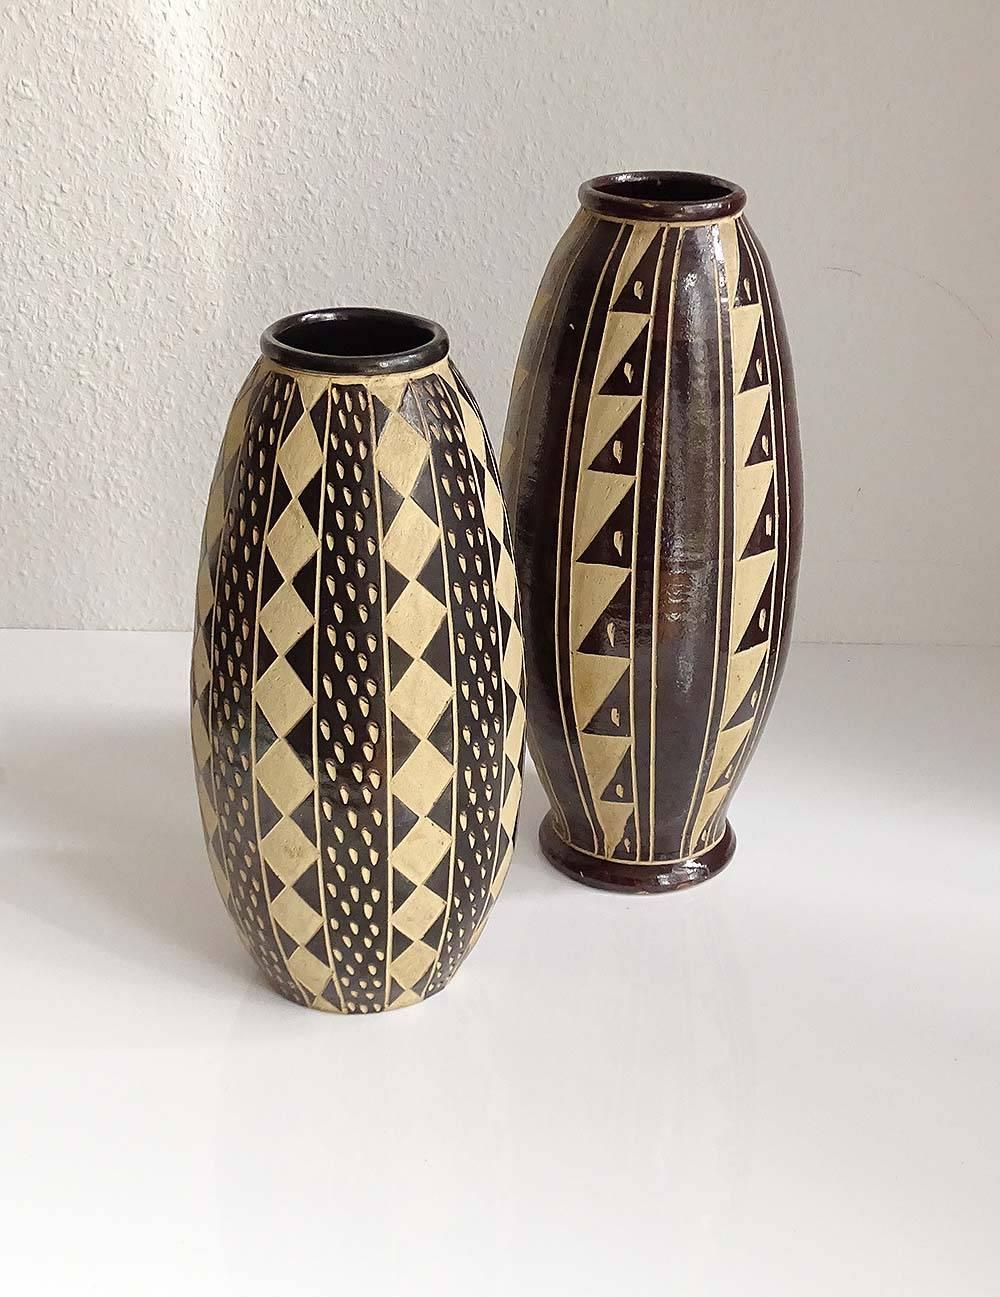 Glazed Striking Pair of Incised Brown Ceramic Amphora Vases, 1960s Modernist Design